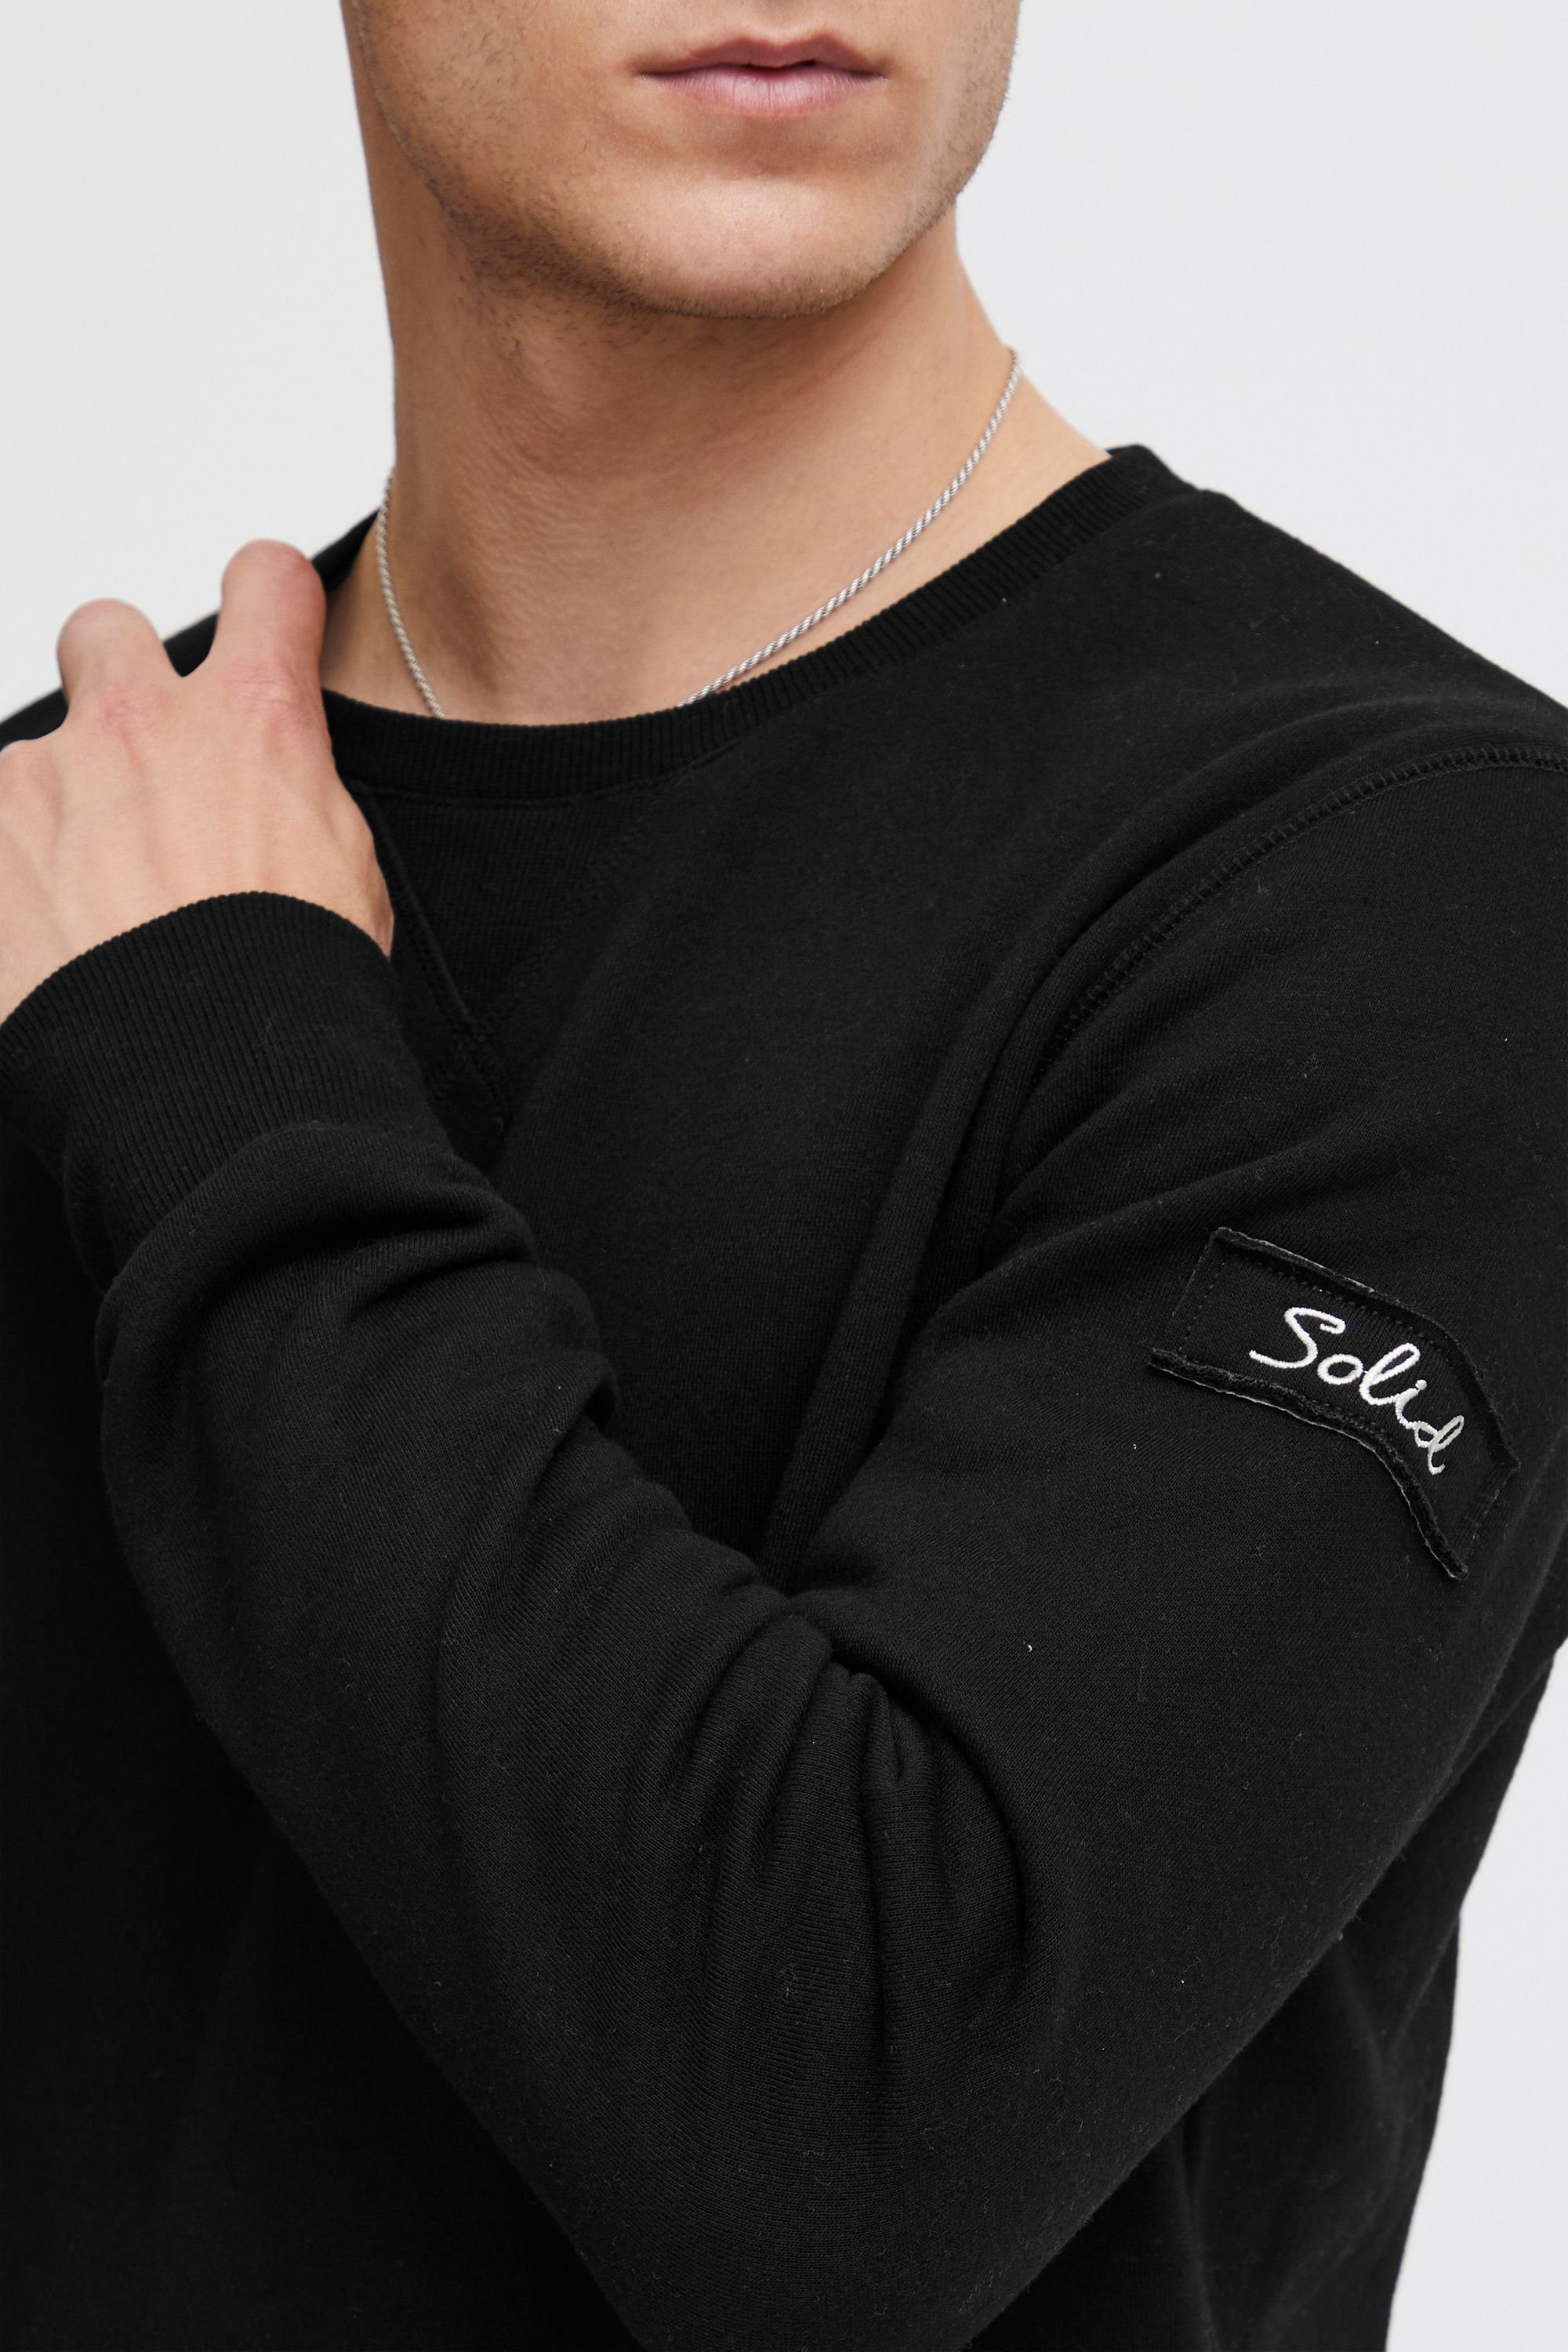 Solid Sweatshirt SDTrip O-Neck Sweatpullover (9000) Black mit Fleece-Innenseite